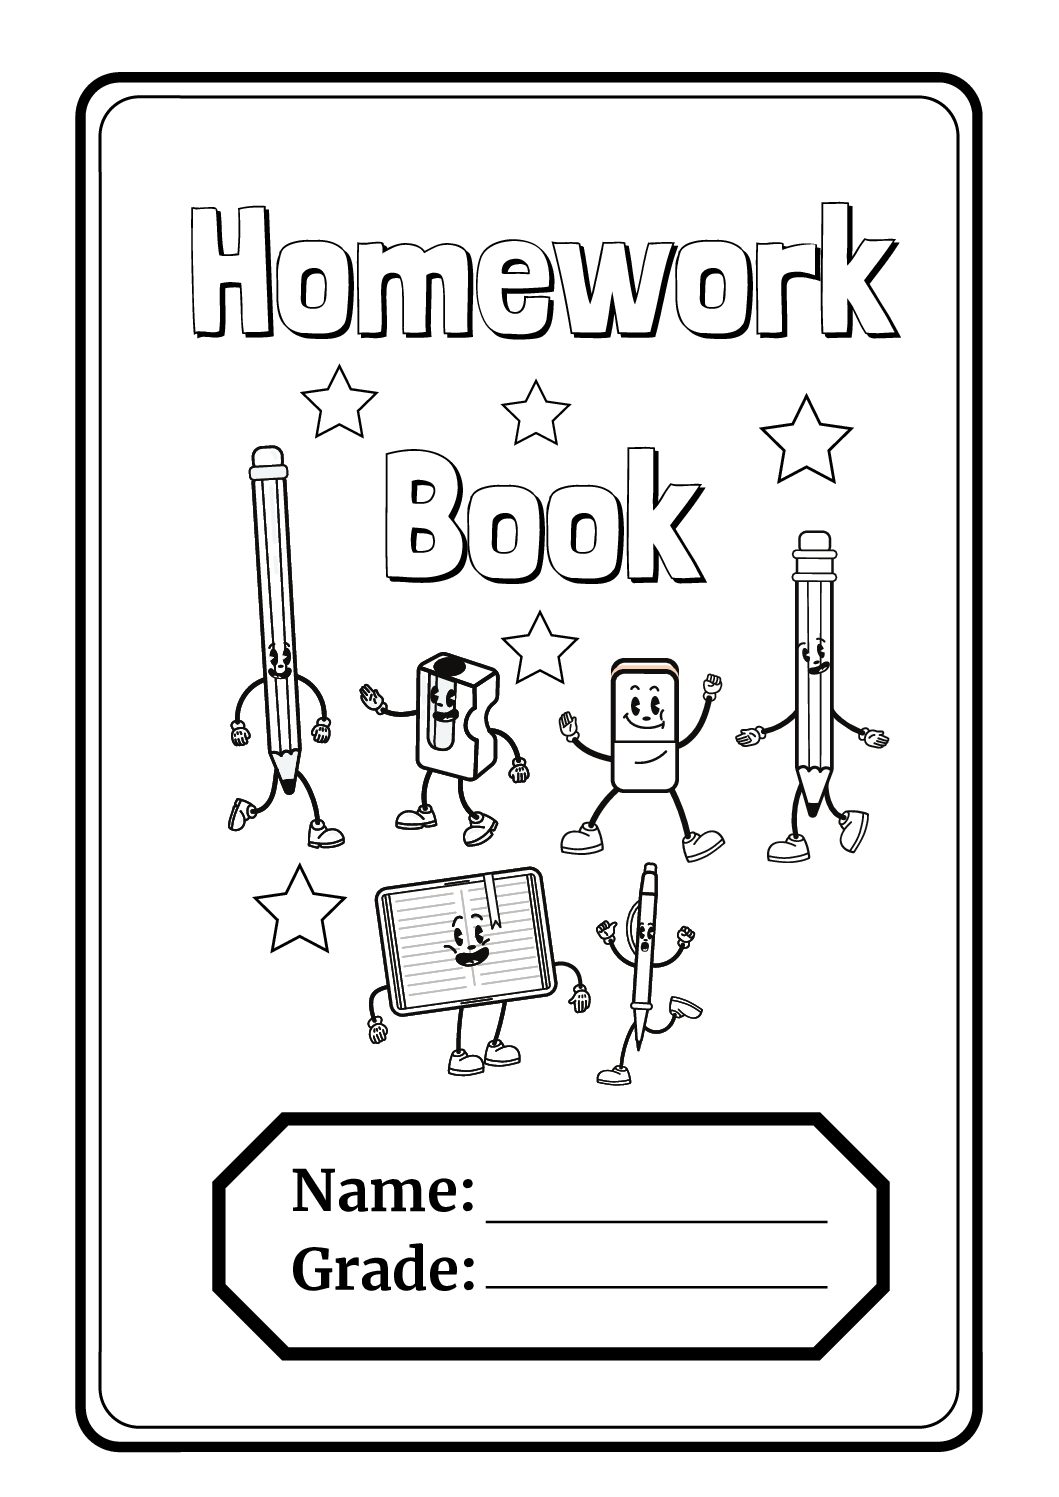 homework book ideas